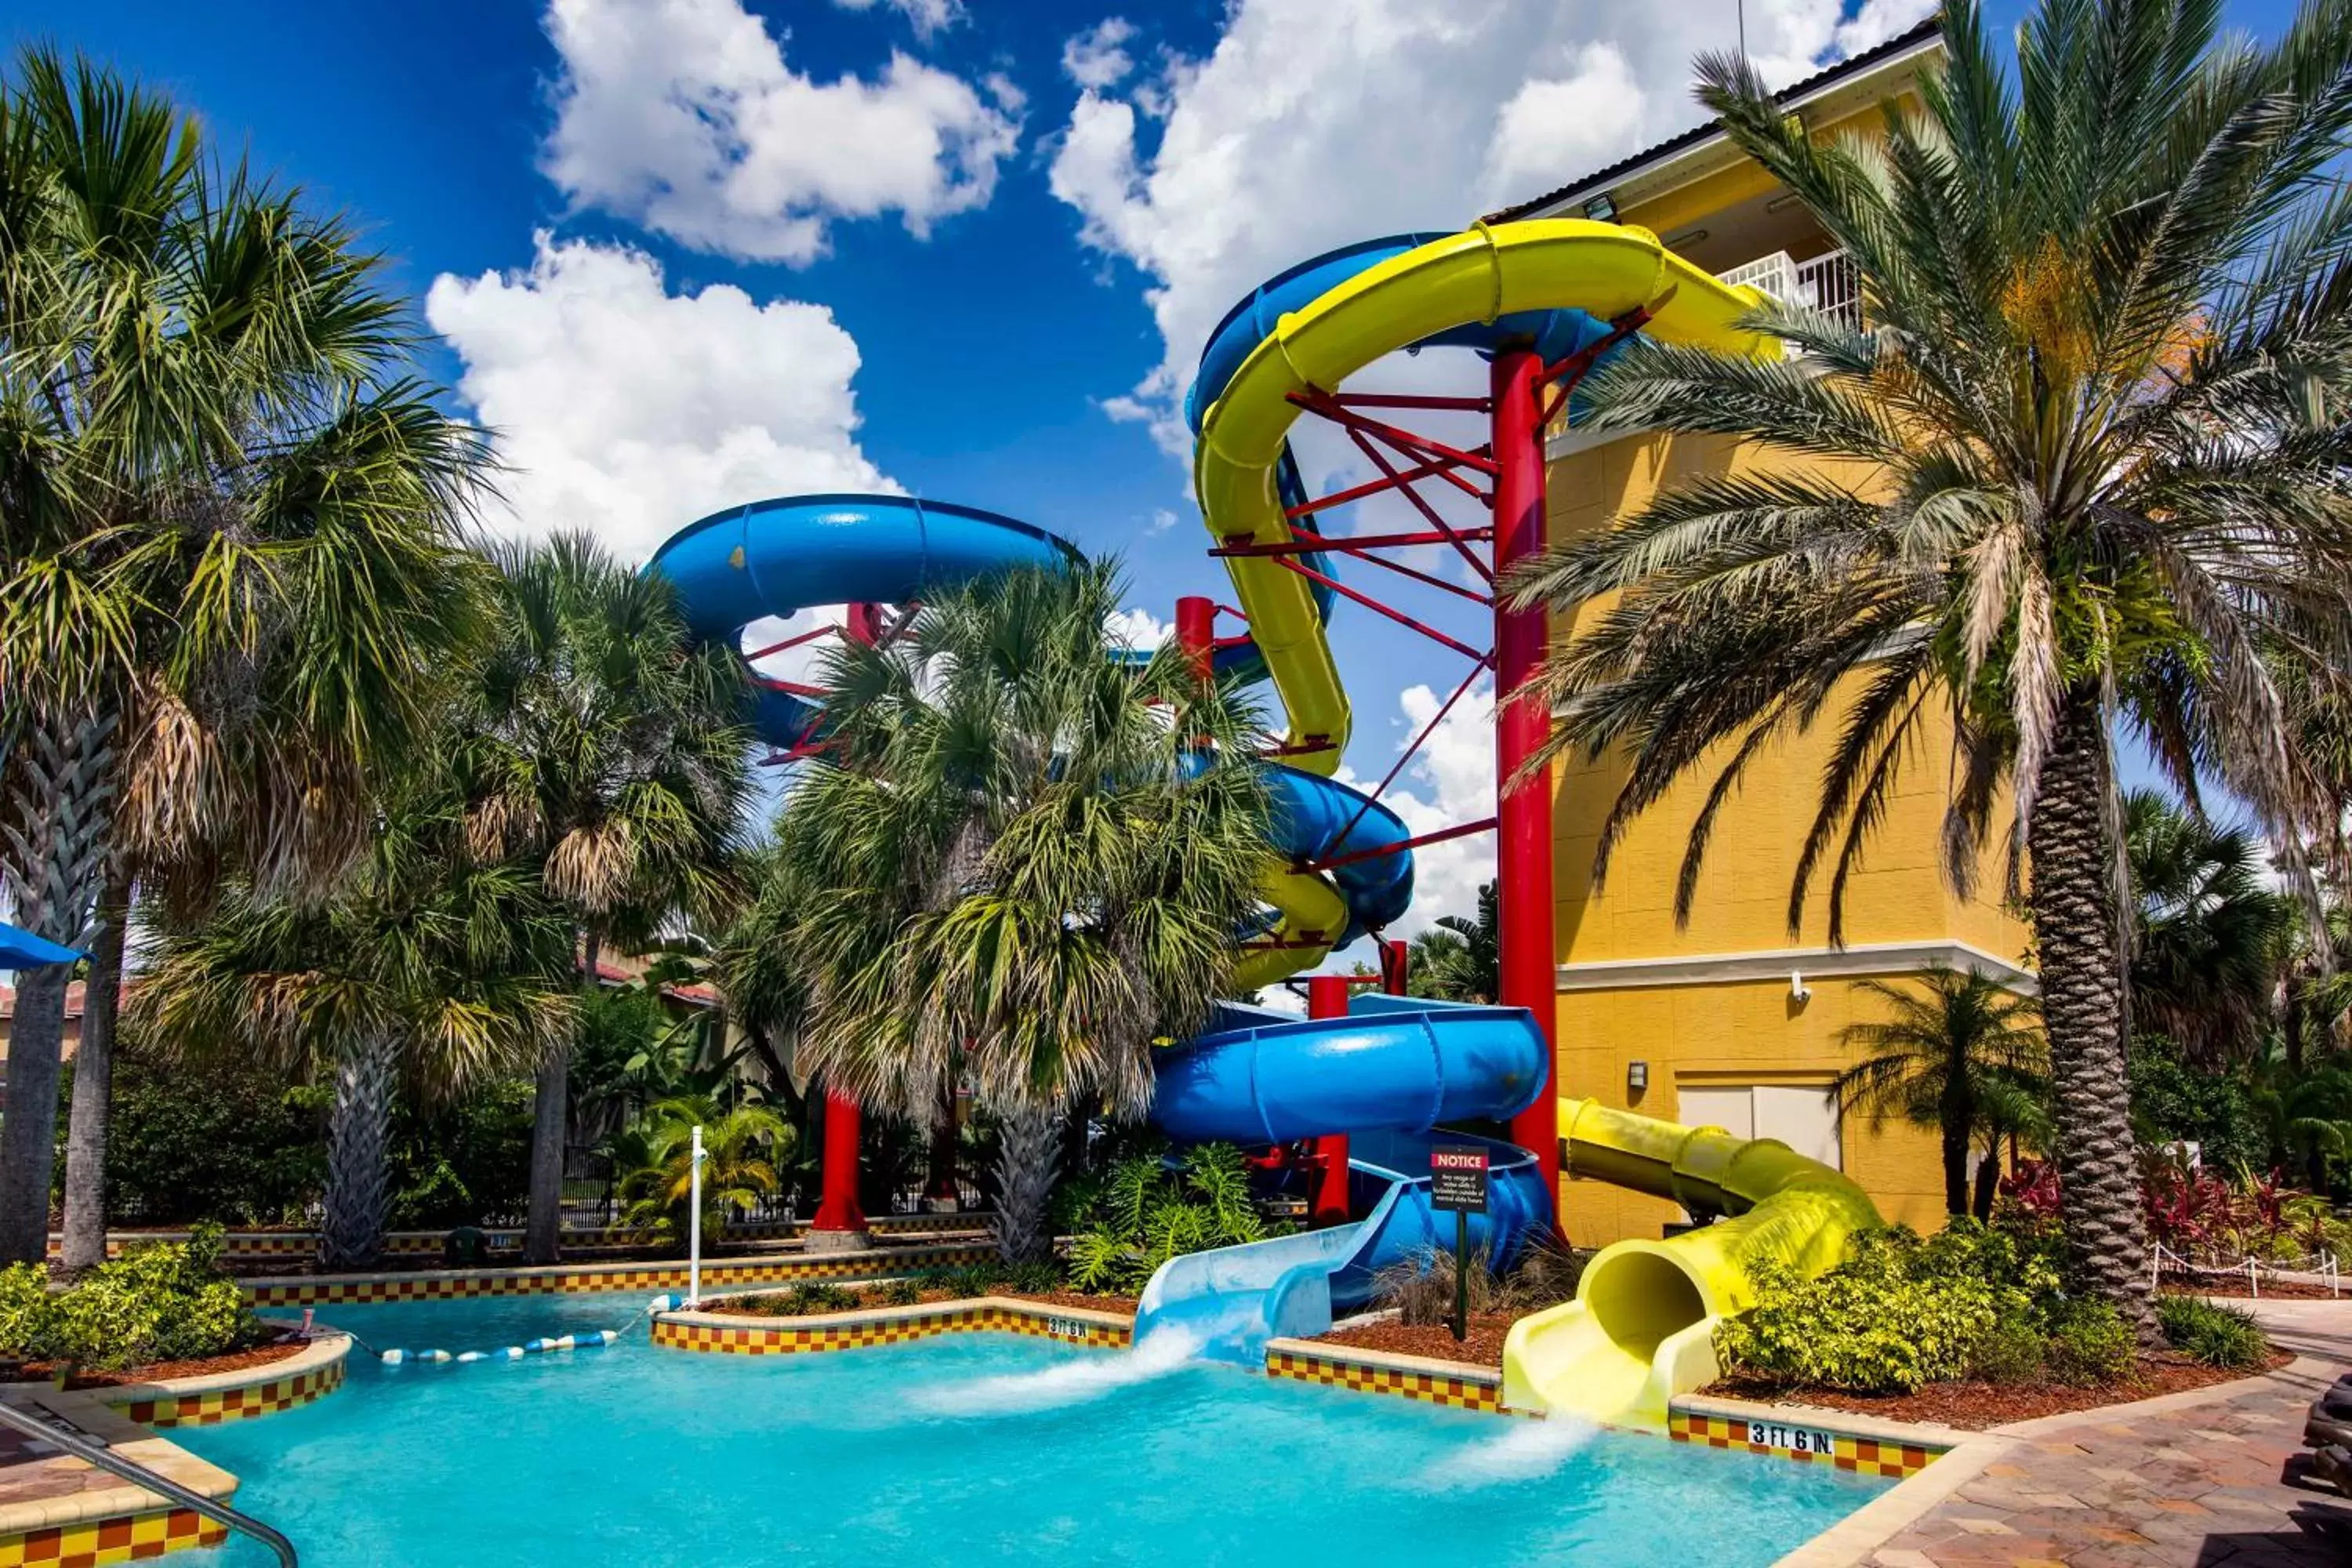 Aqua park, Water Park in FantasyWorld Resort